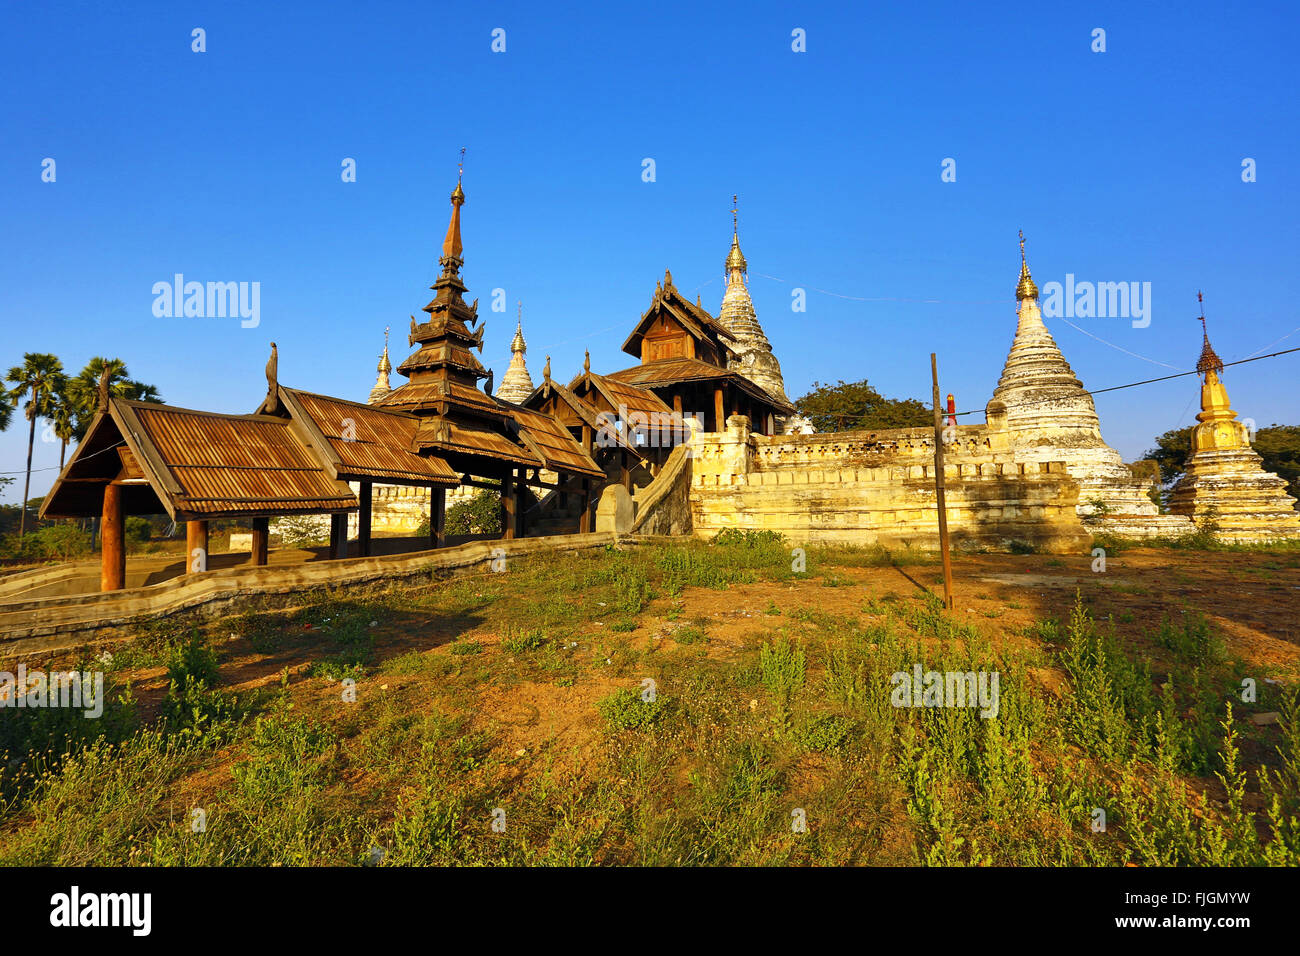 Min O Chantha Paya Group Temple Pagoda on the Plain of Bagan, Bagan, Myanmar (Burma) Stock Photo